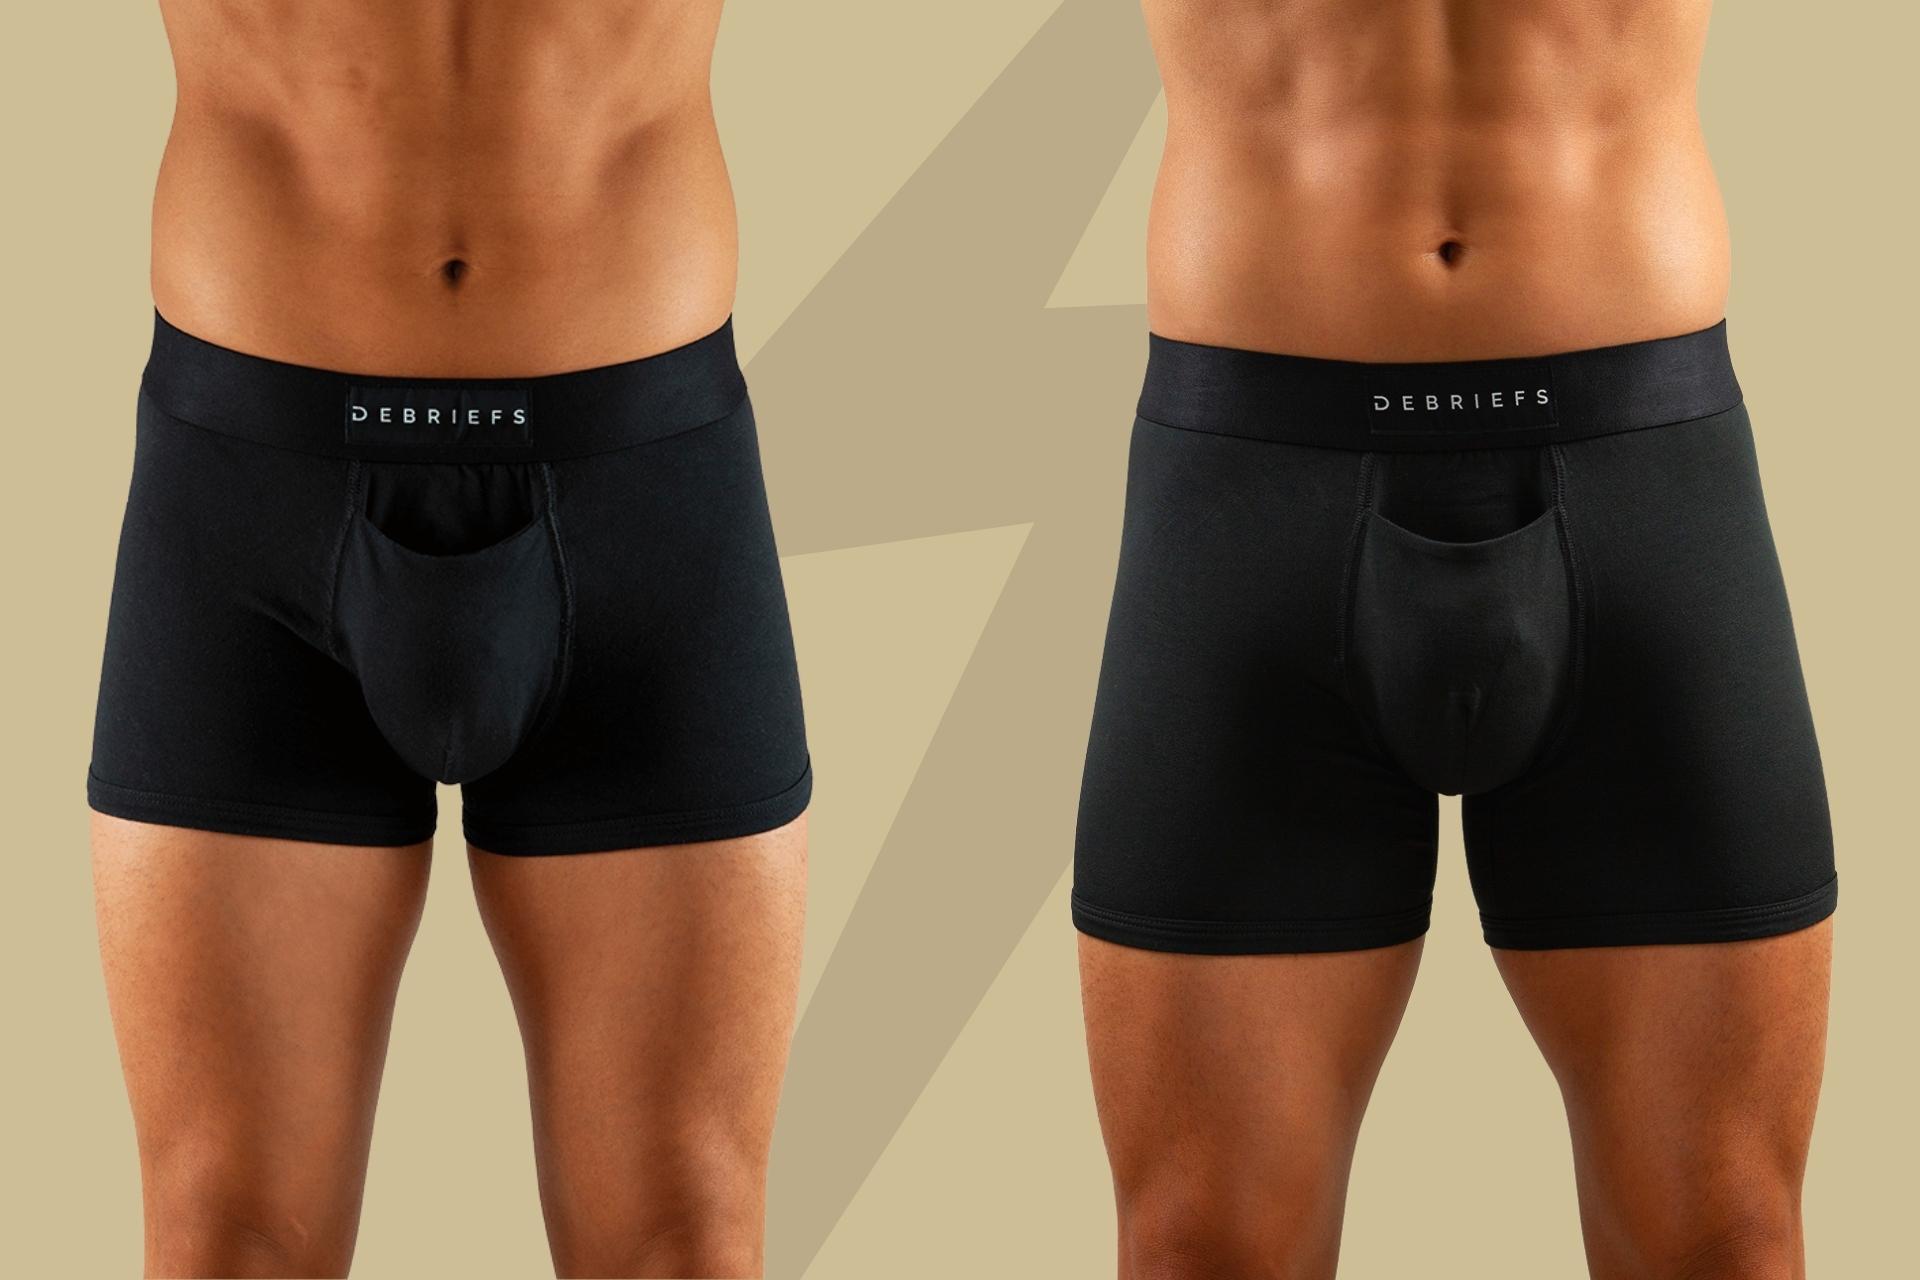 Trunks vs Briefs, Best Underwear For Your Body Type